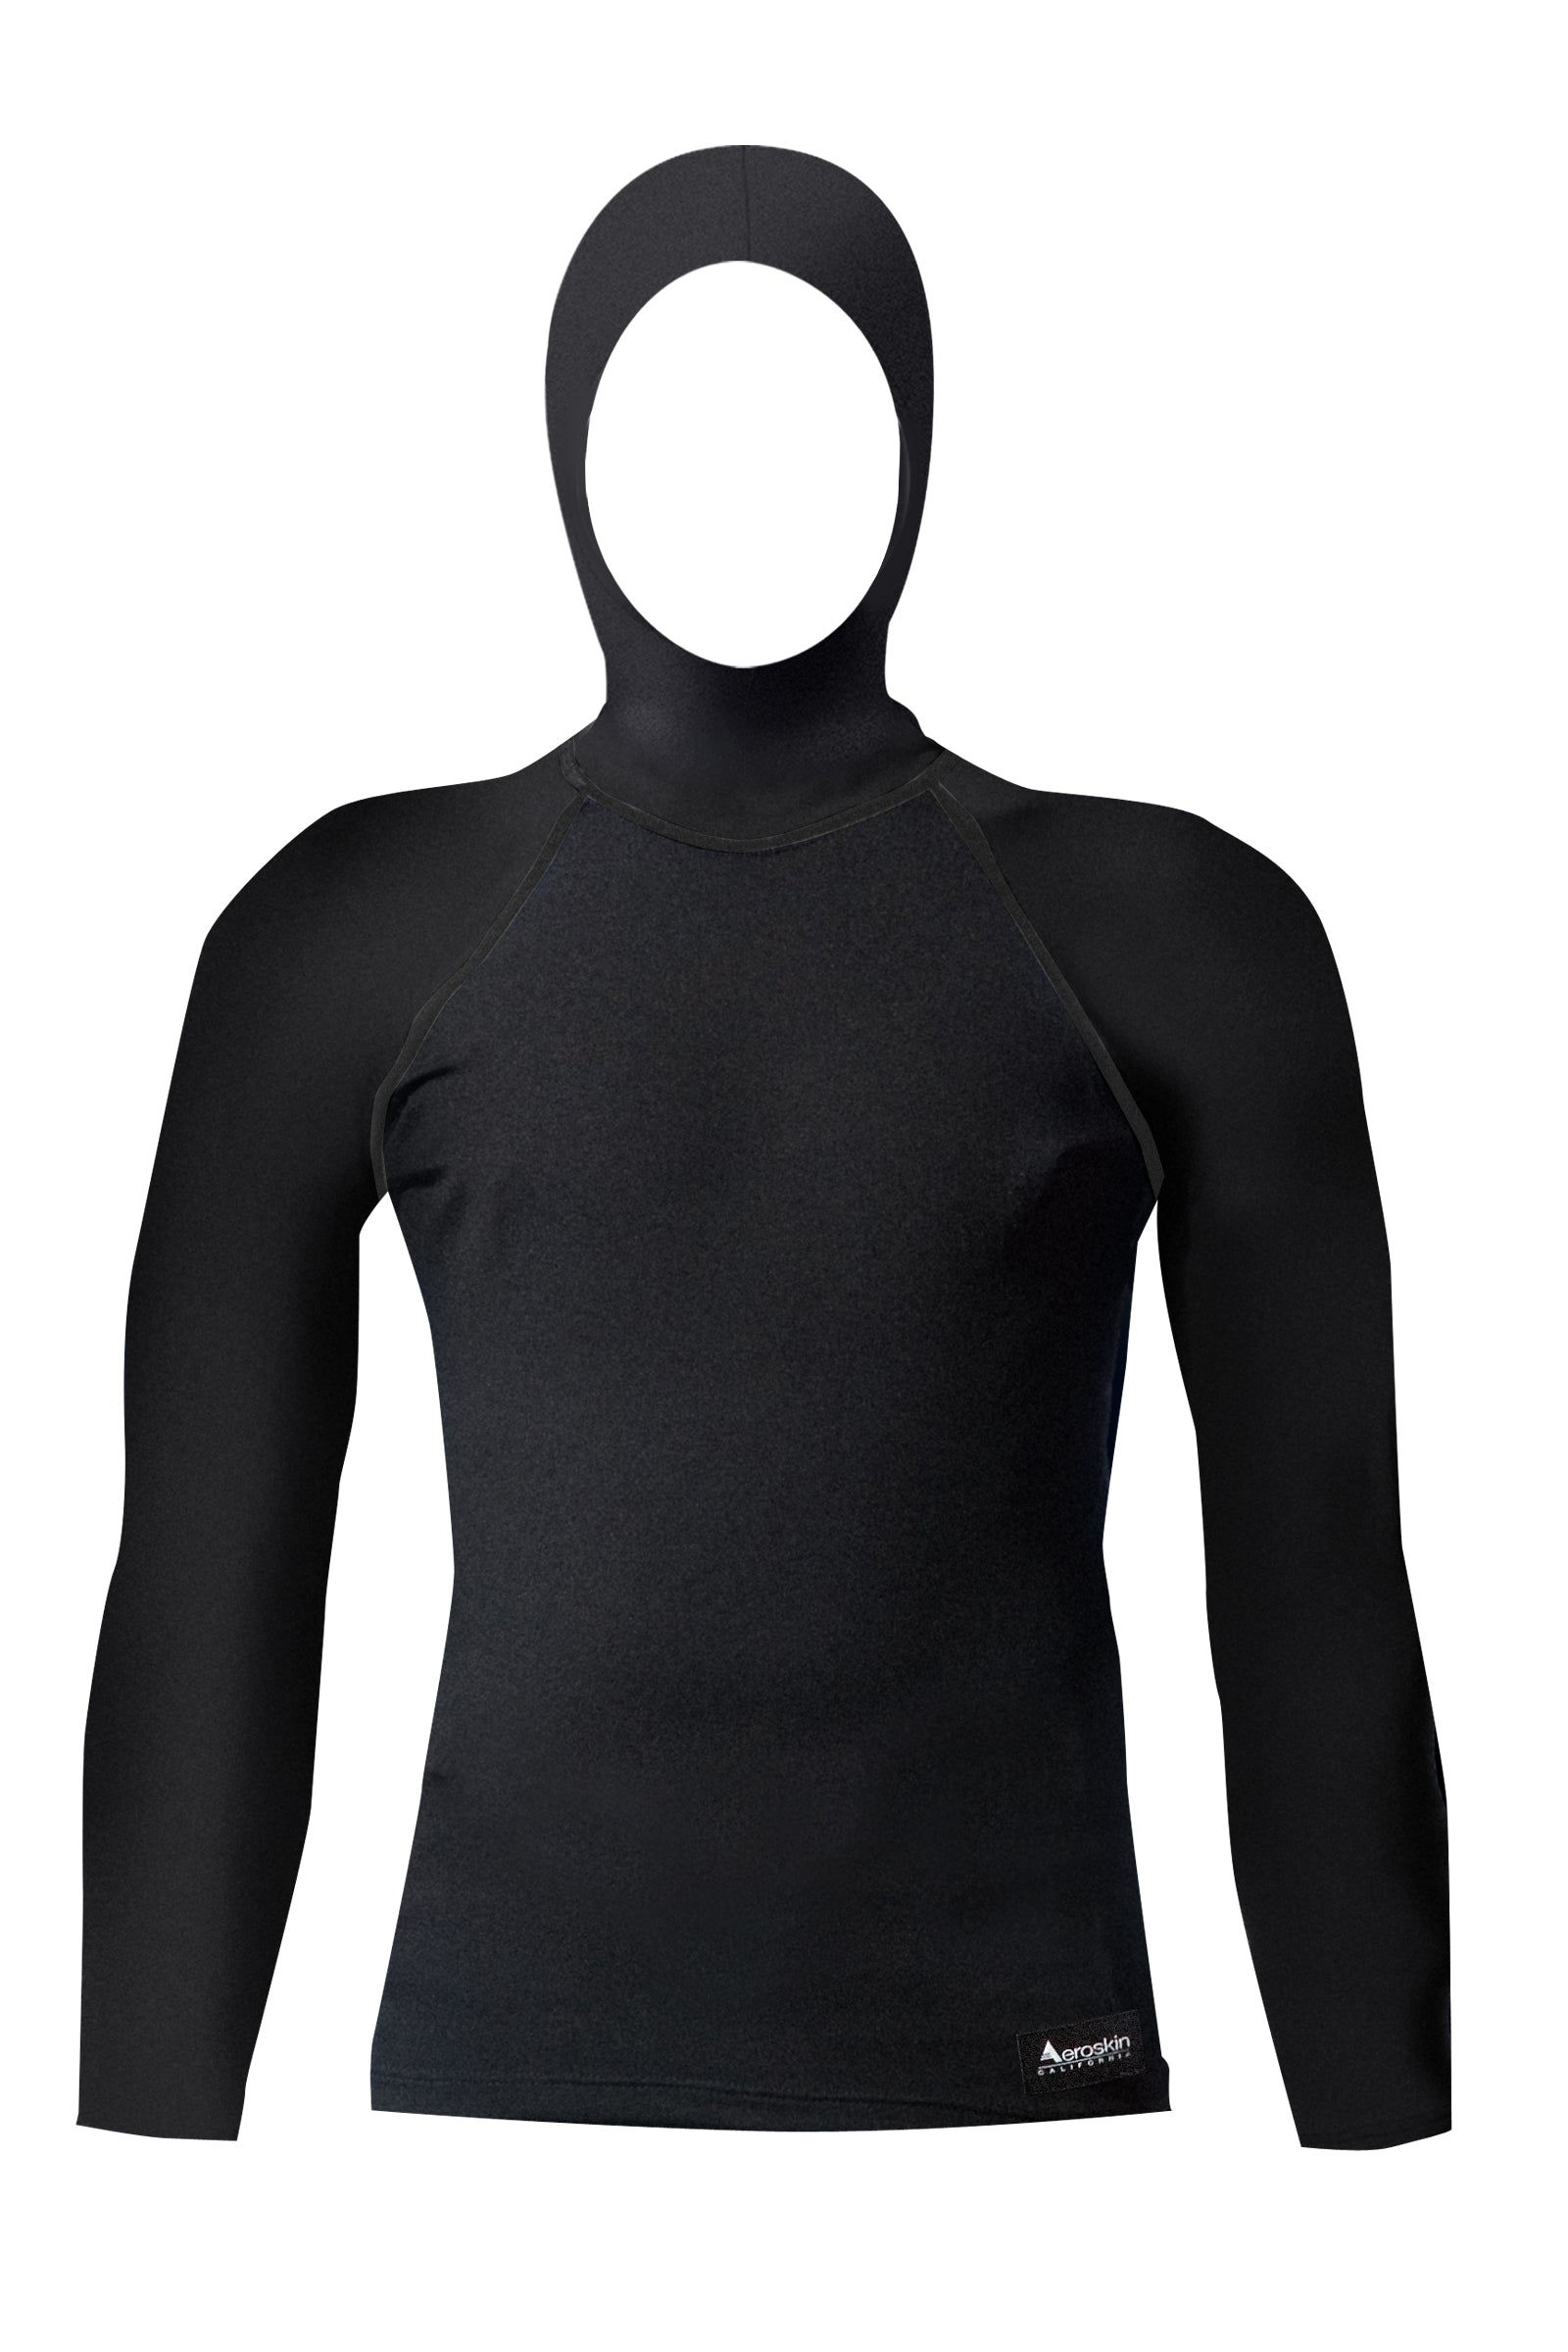 P351 Raglan Long Sleeve Vest Hood (Unisex)-Top-wetsuit, diver, sharkskin, snorkeling gear, watersports equipment, diving fins, snorkeling mask, ocean reef, Garmin G1